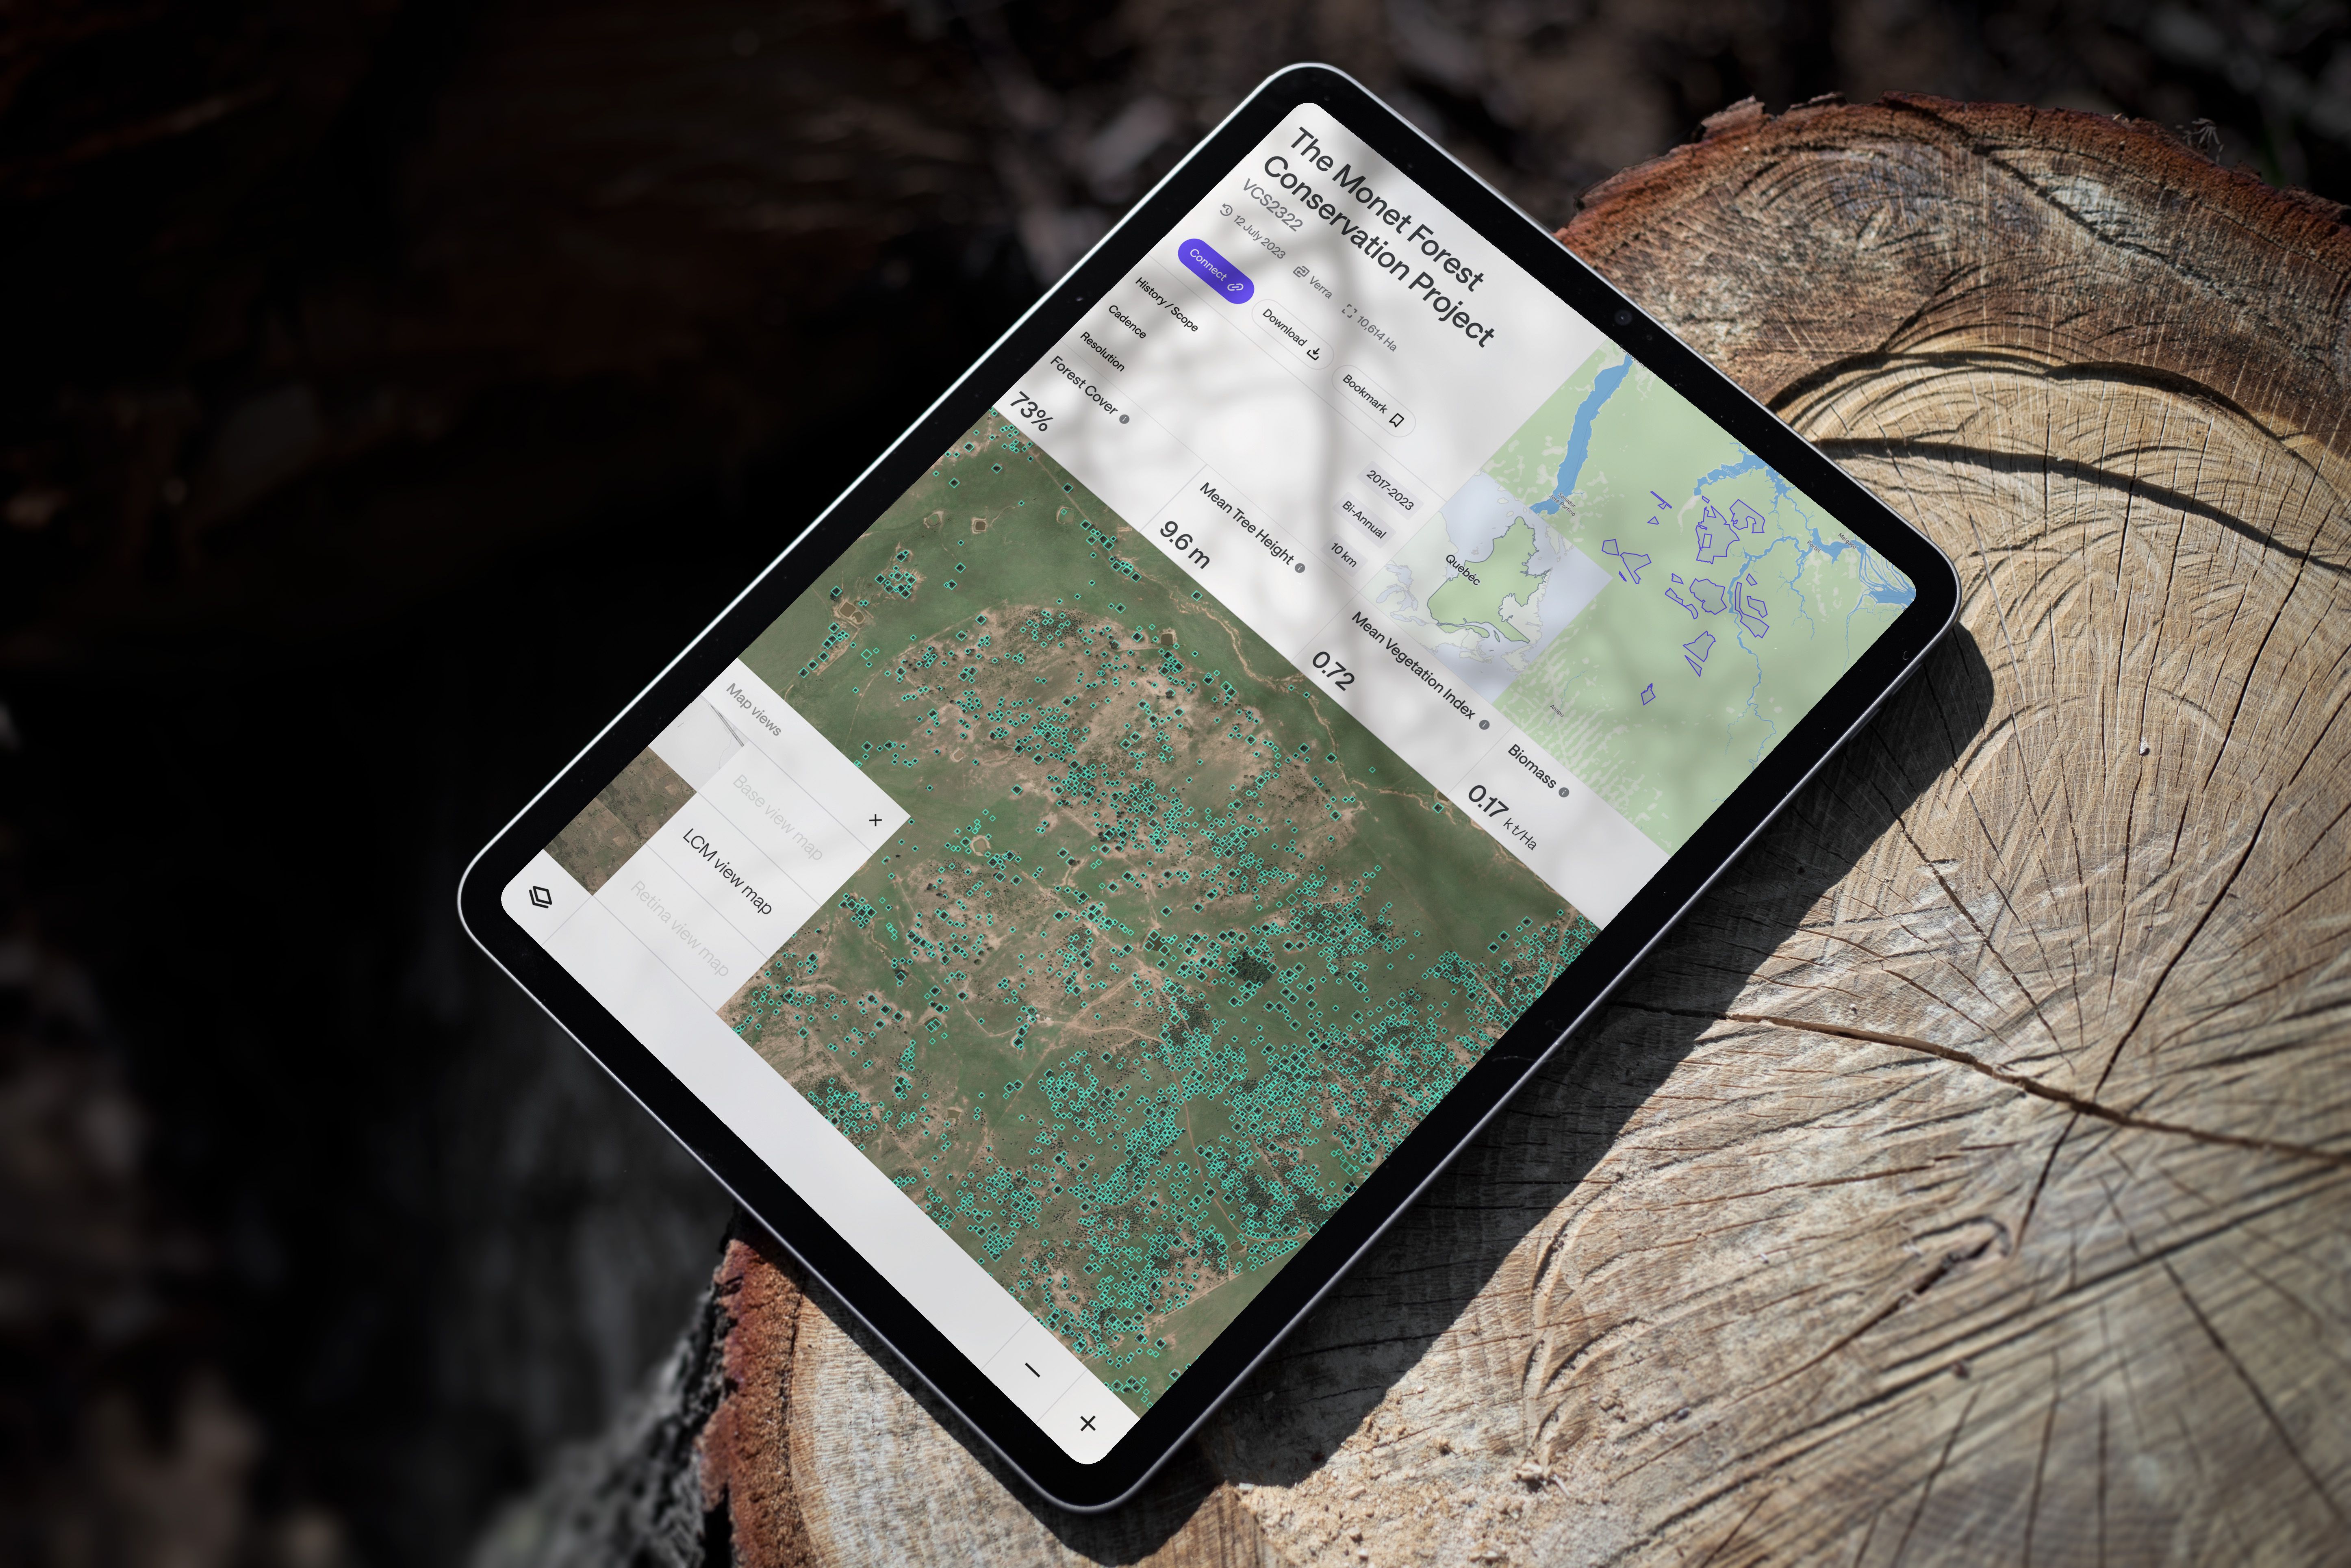 iPad showing Treefera product